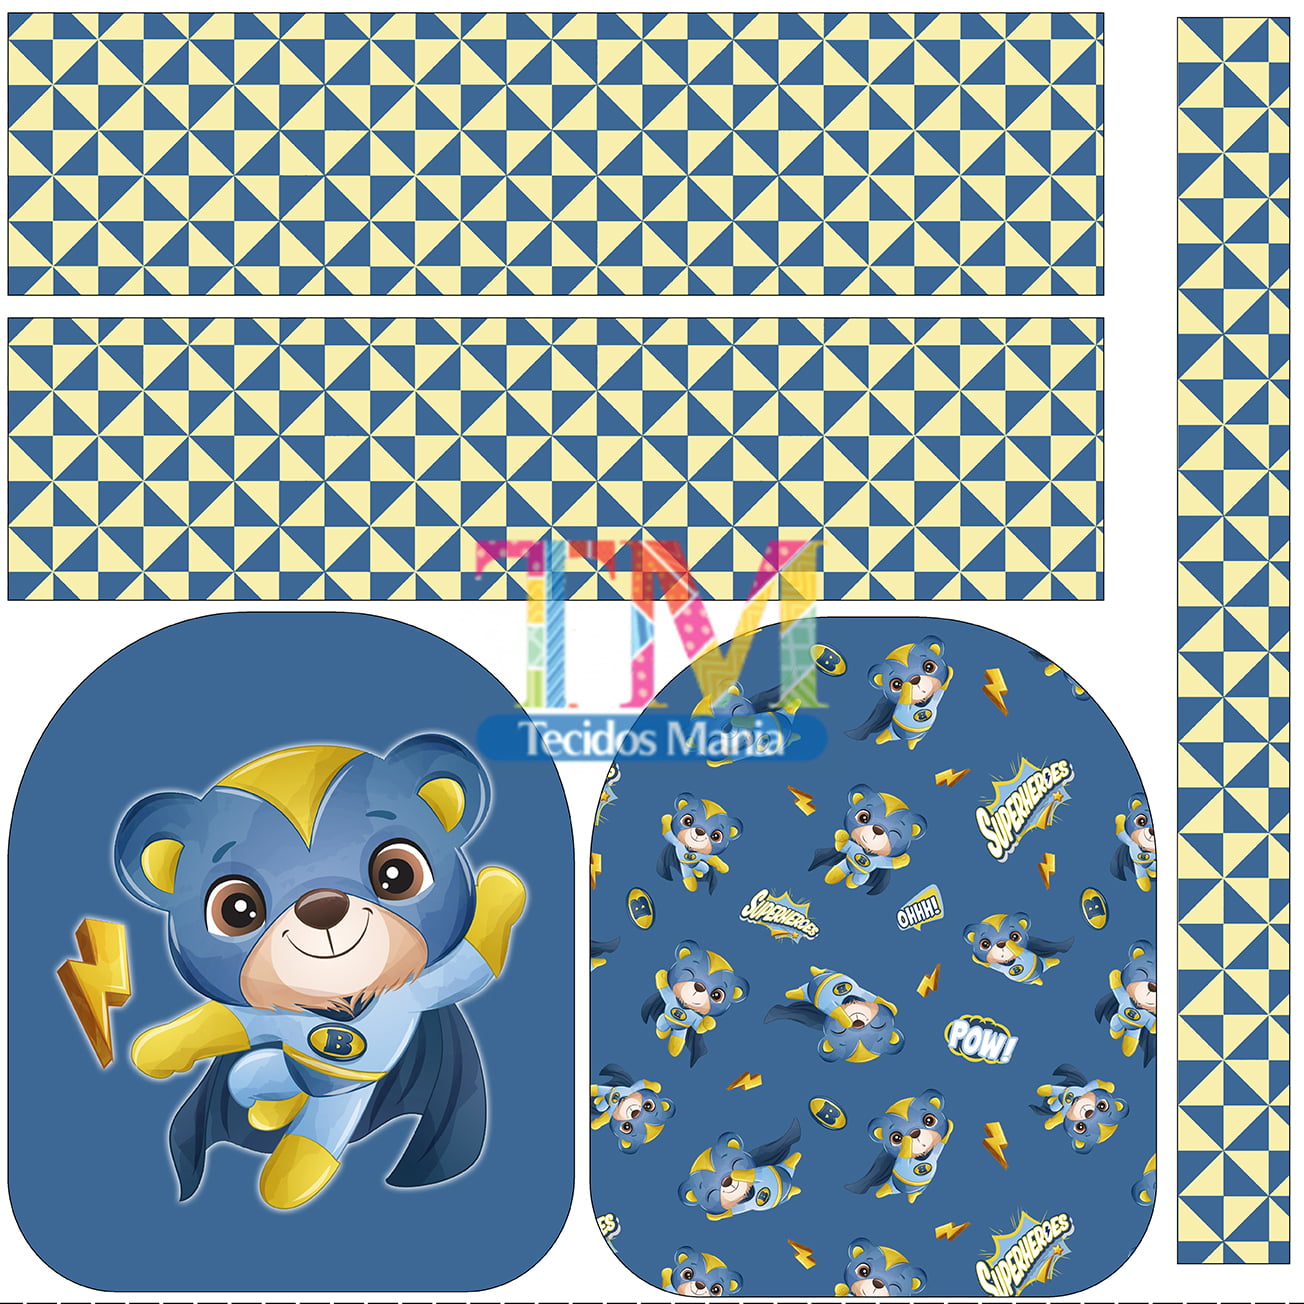 Sintético doll estampado - Painel Mini Mochila - Super heroi - Ursinho - Fundo azul